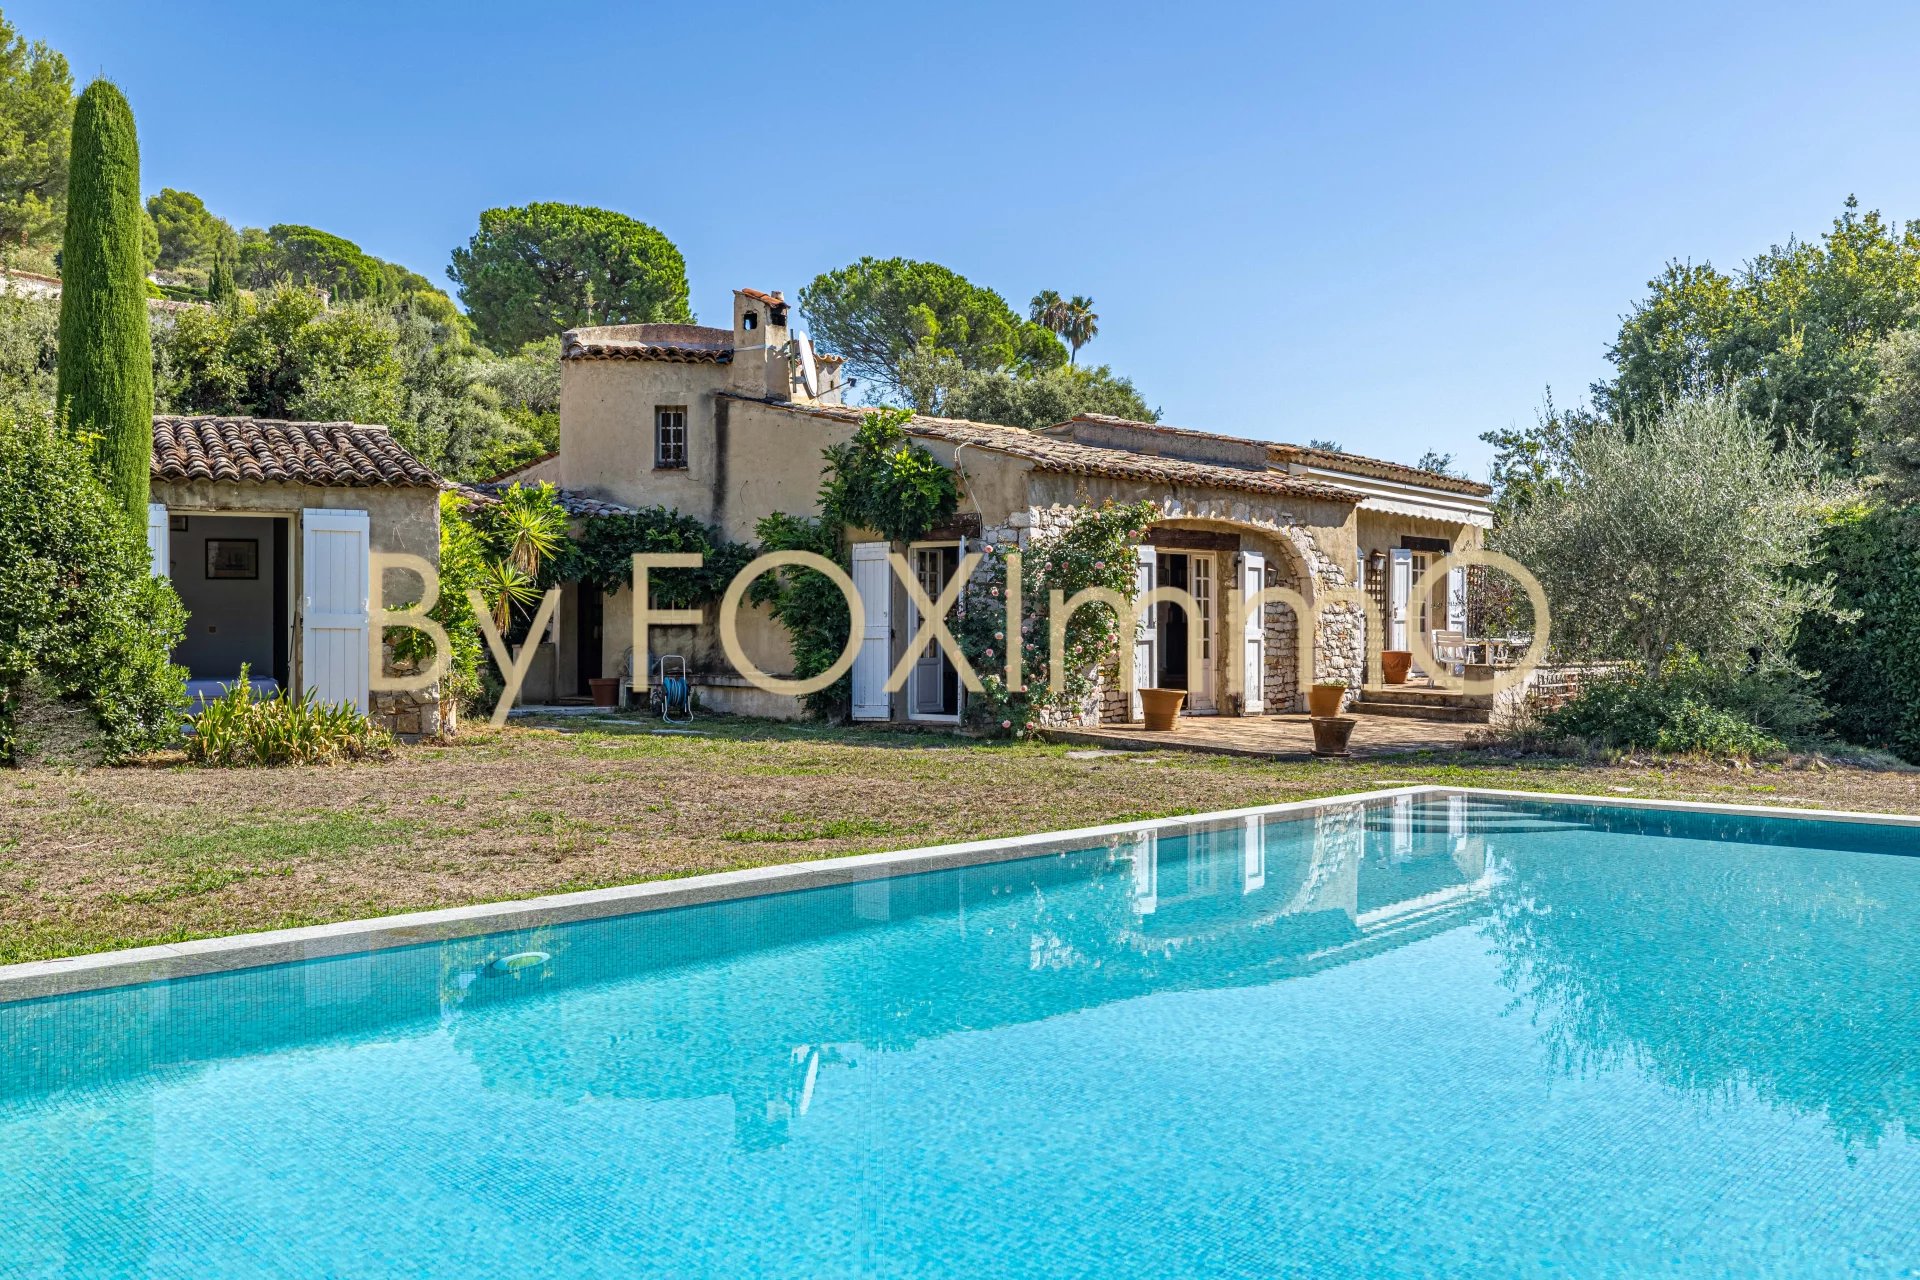 Provençal standalone villa, infinity pool, flat garden, residential neighborhood.